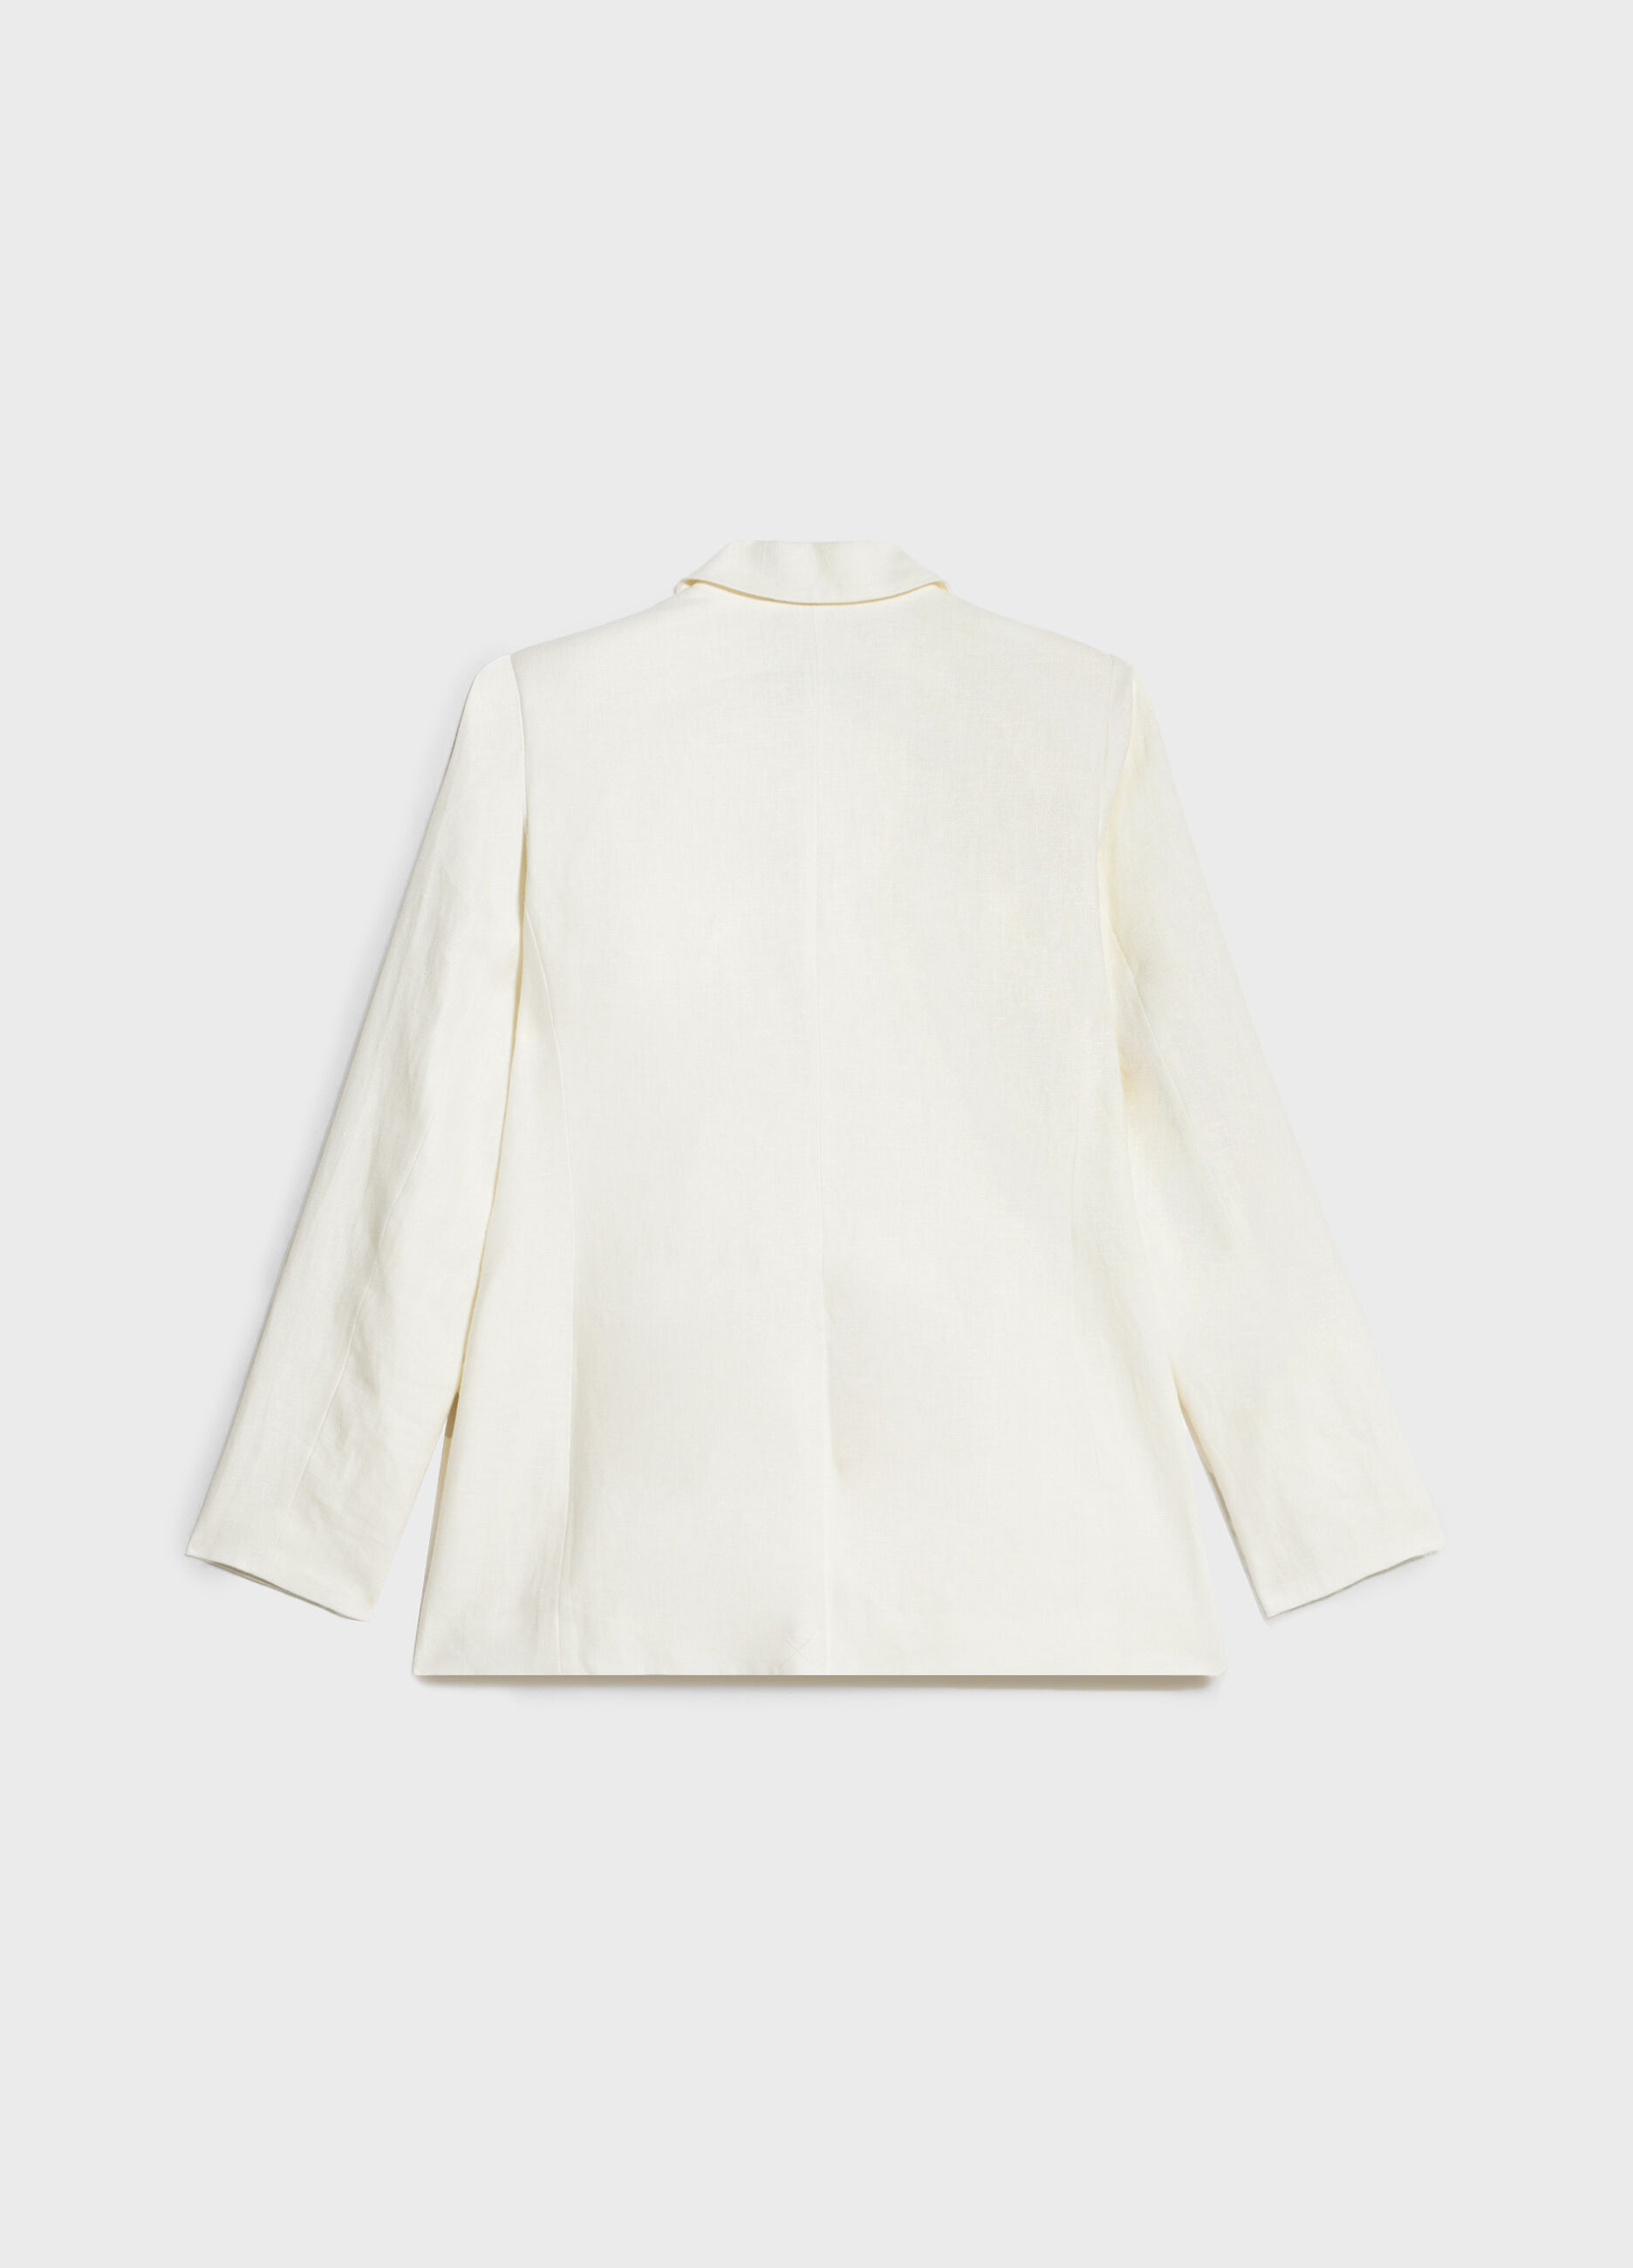 Linen blazer with single button